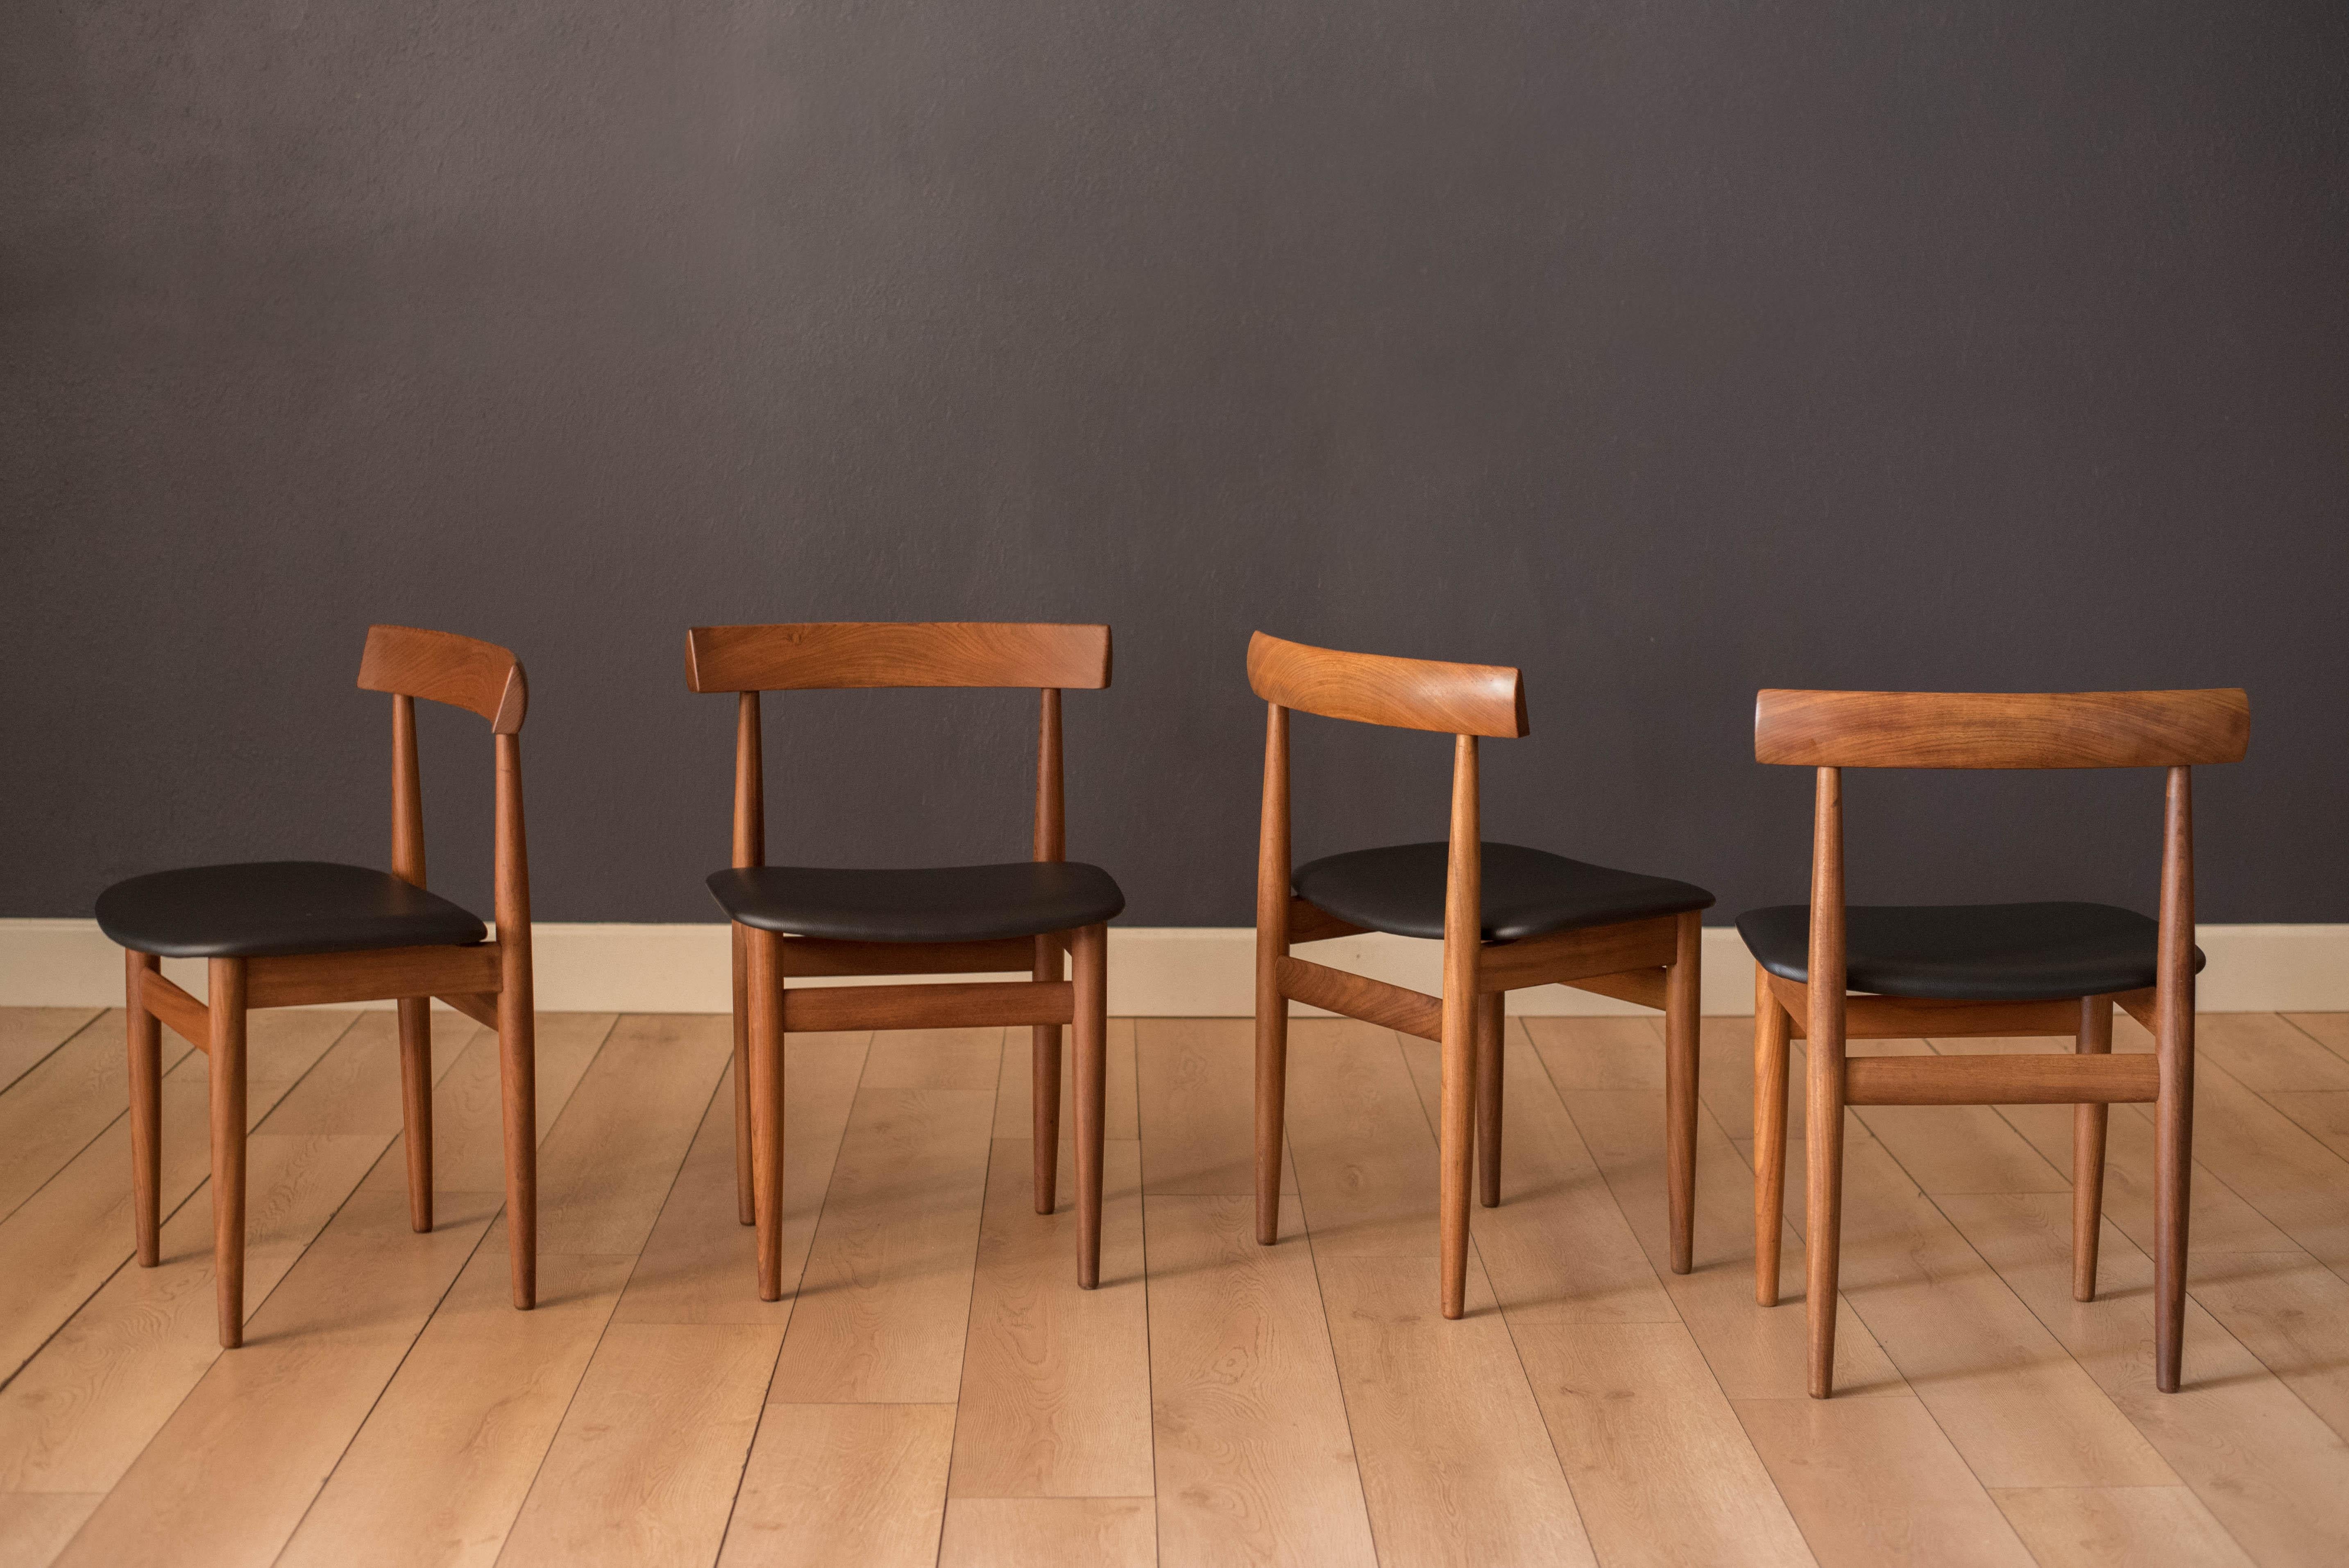 Vintage Danish Hans Olsen Teak Round Dining Table and Chair Set 2